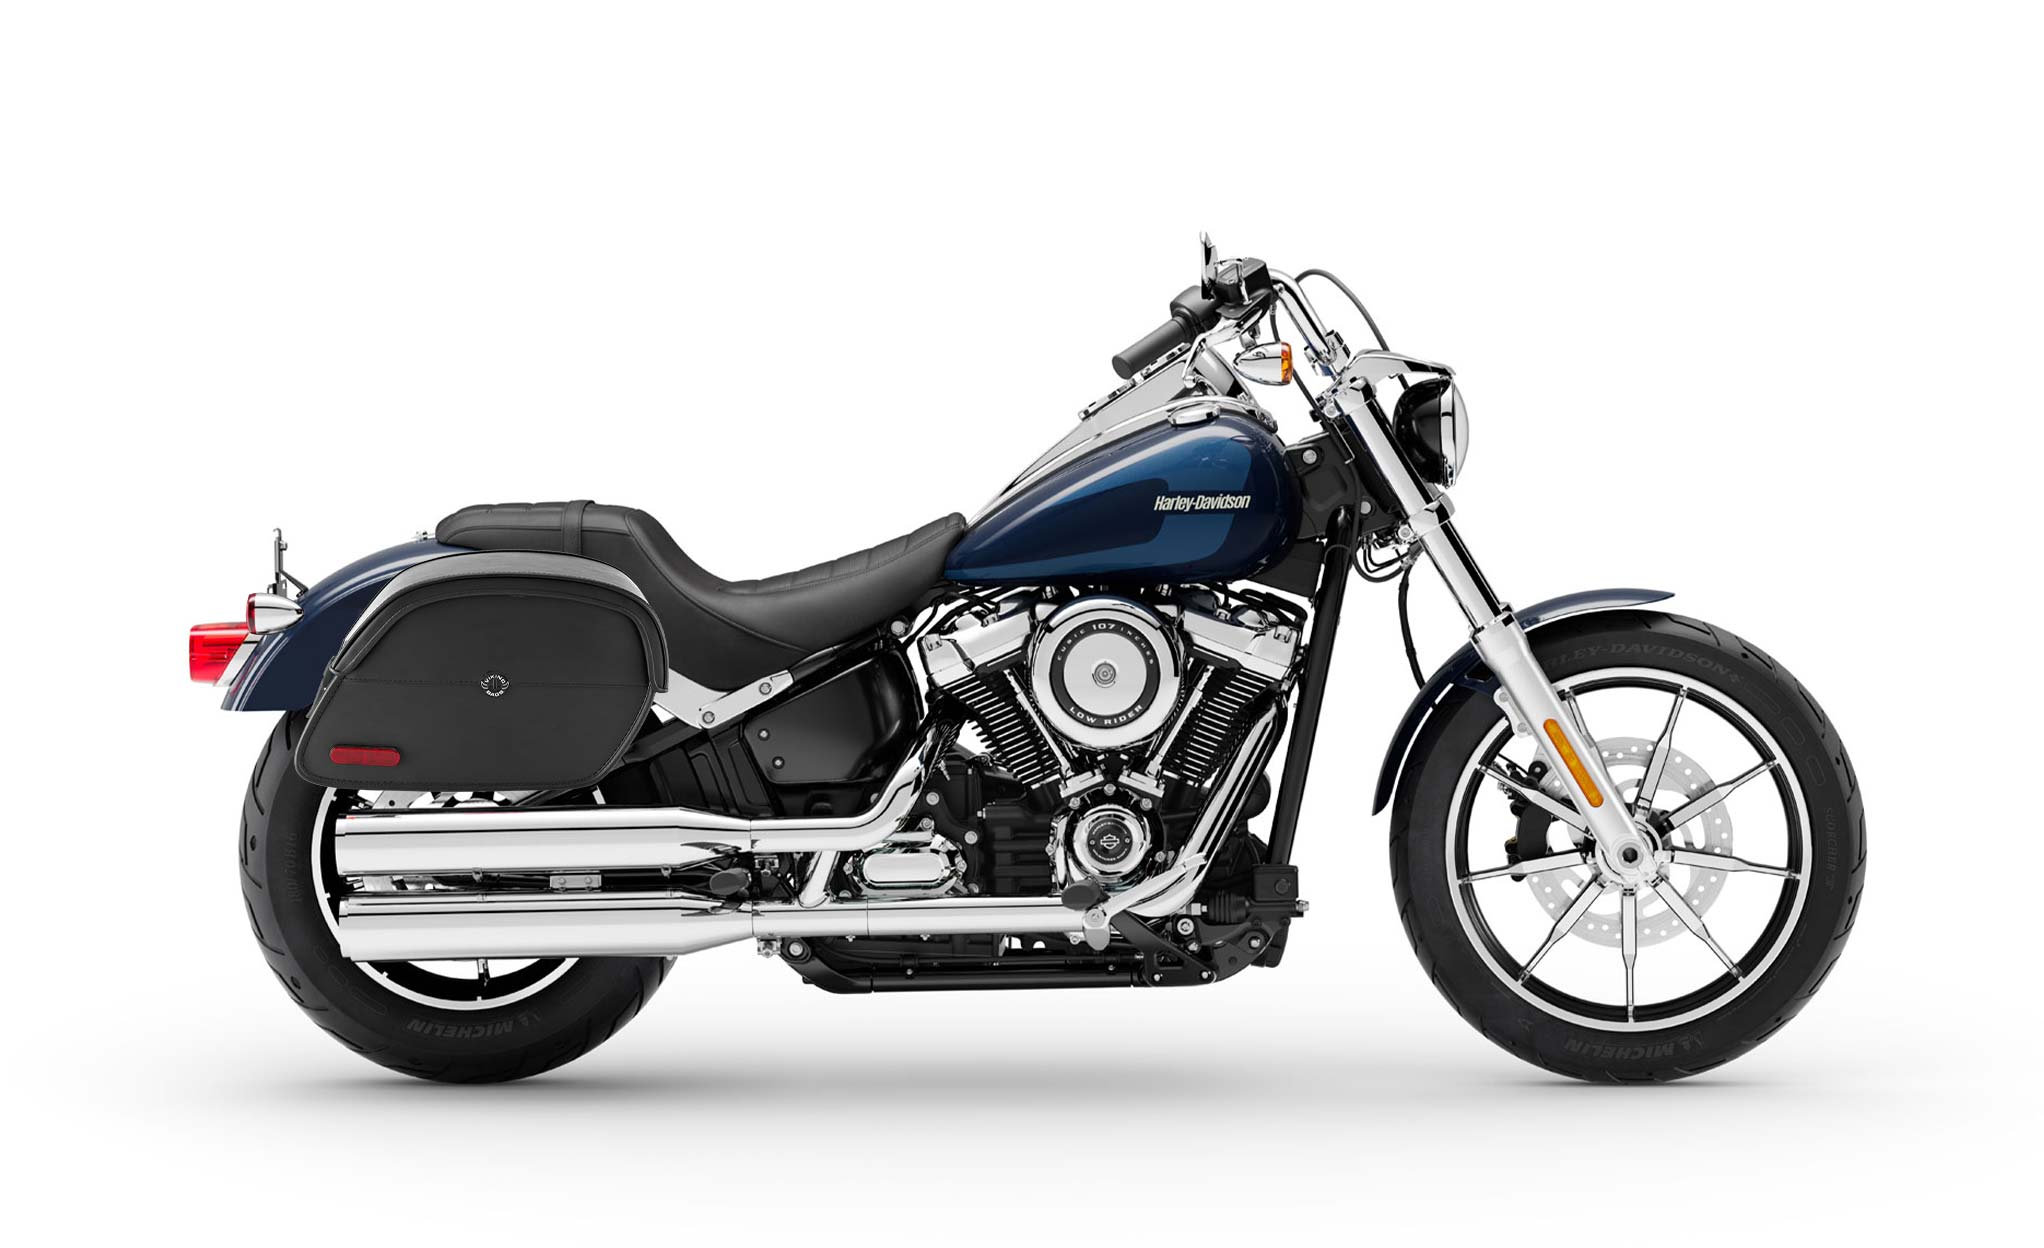 Viking California Large Leather Motorcycle Saddlebags For Harley Davidson Softail Low Rider Fxlr on Bike Photo @expand